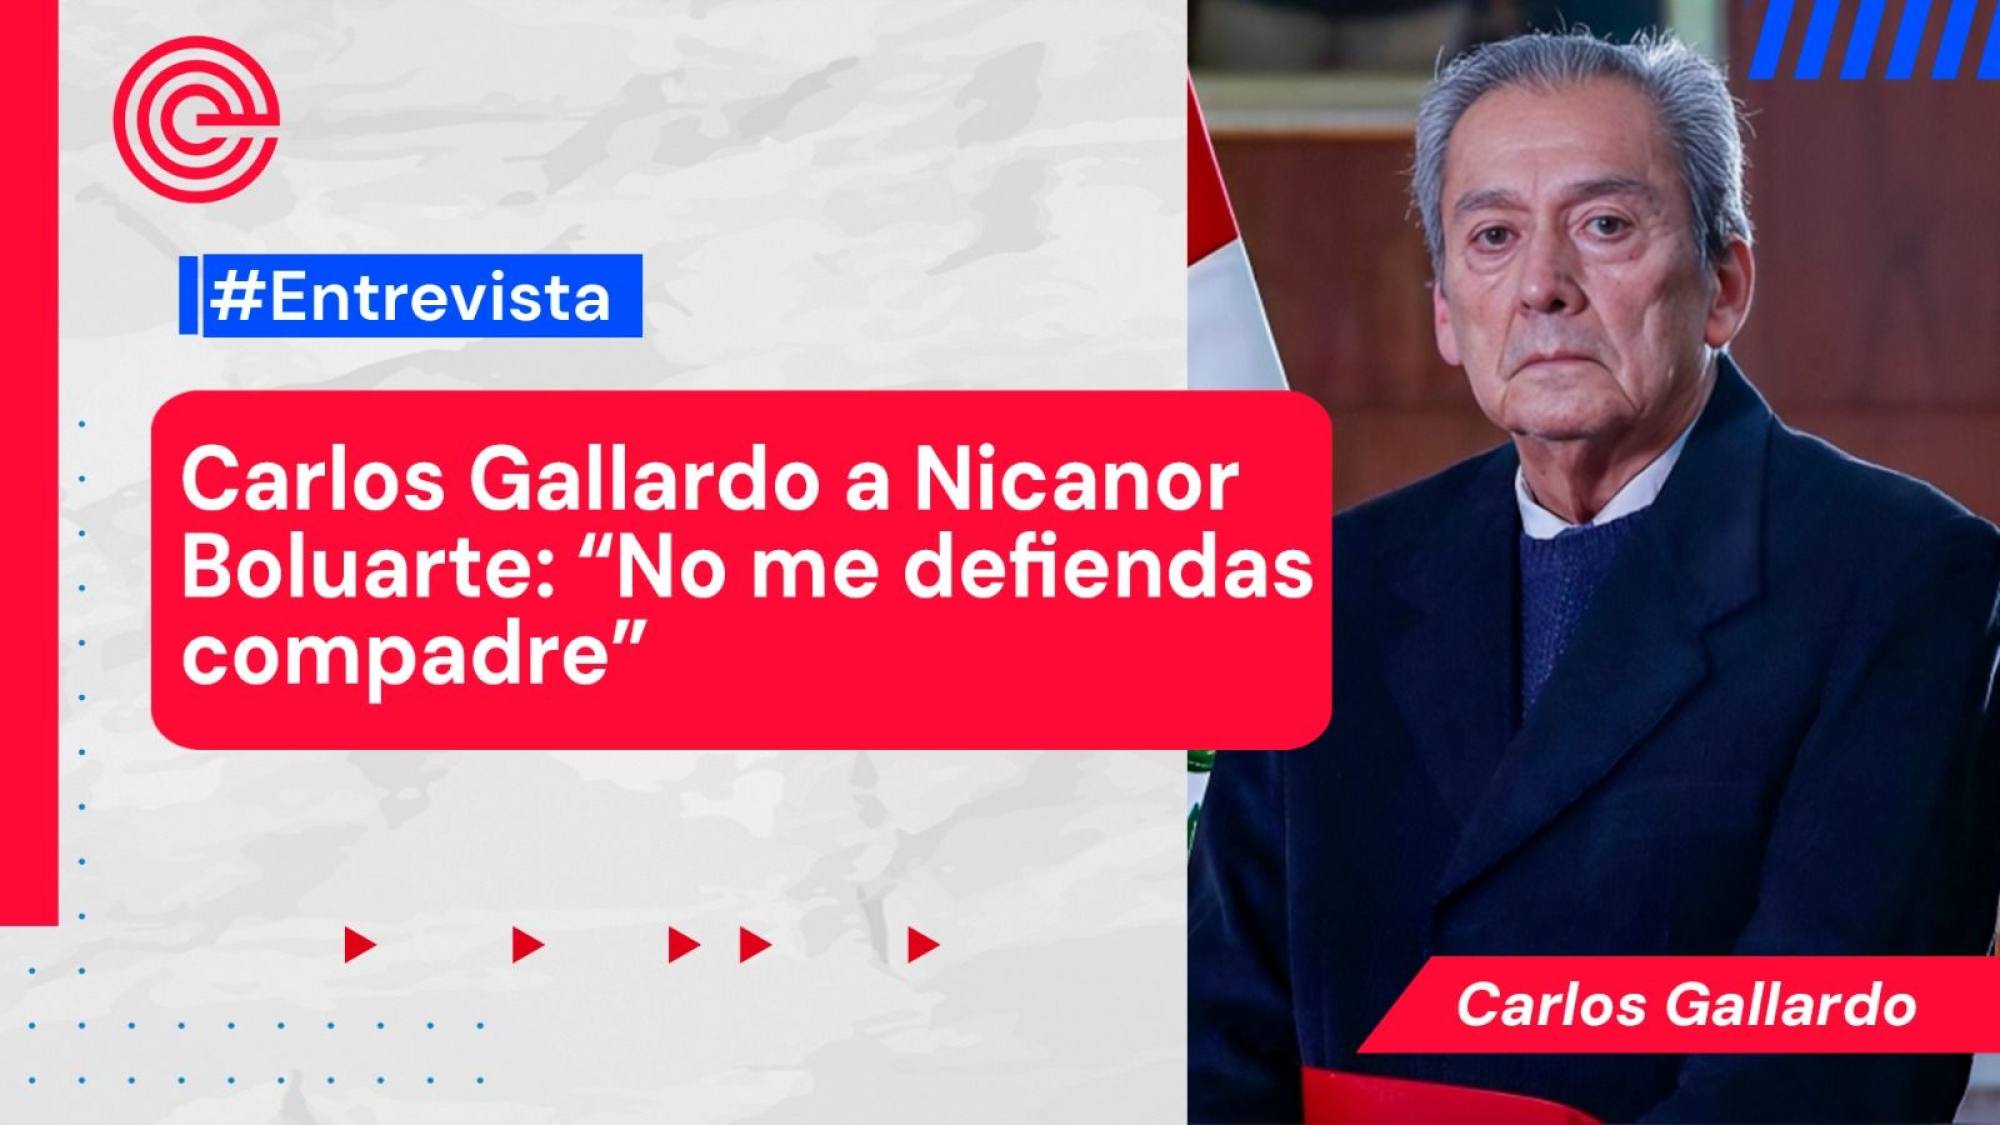 Carlos Gallardo a Nicanor Boluarte: “No me defiendas compadre”, Epicentro TV